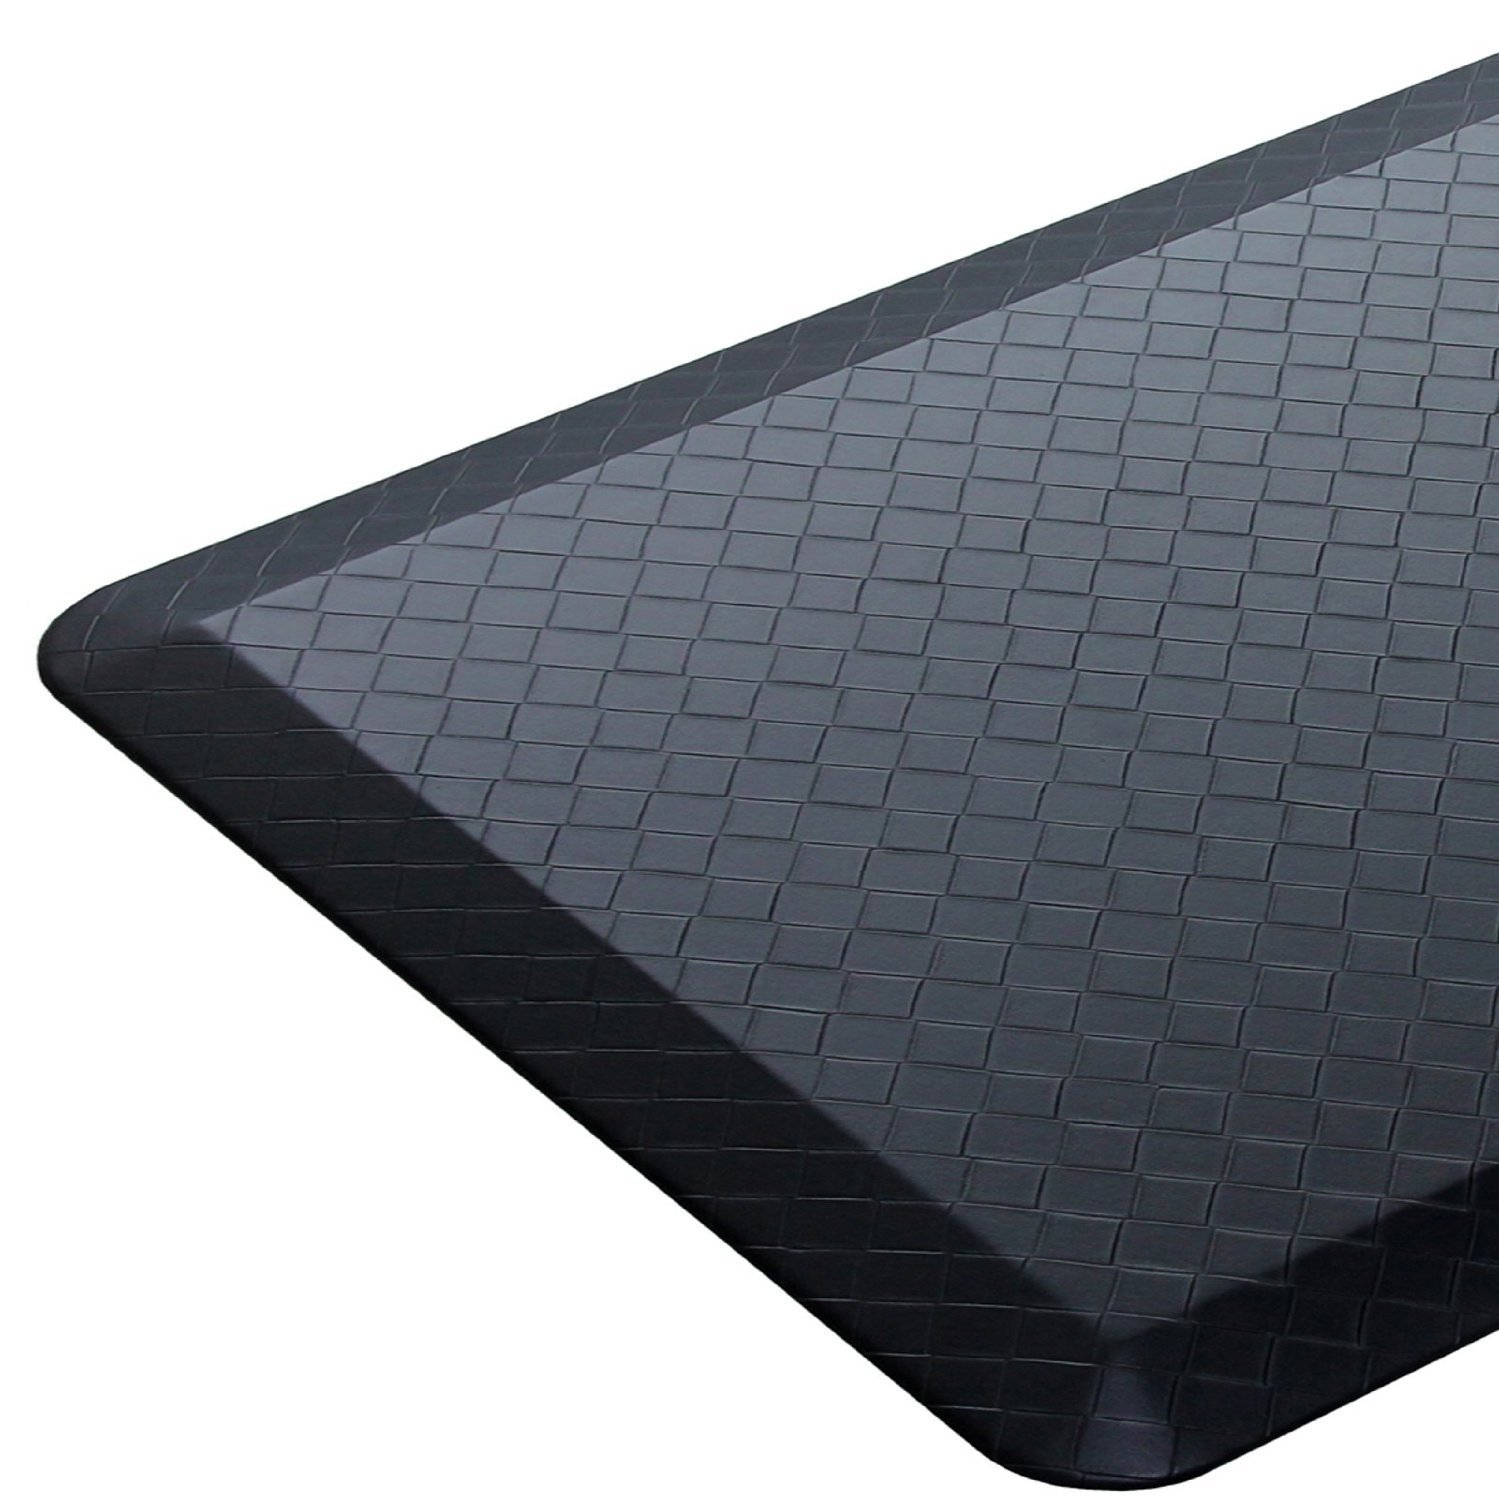 PU polyurethane material anti fatigue mats, mats manufacturer in China, floor mat,Door mat, Bath mat, Outdoor mat, Bar mat